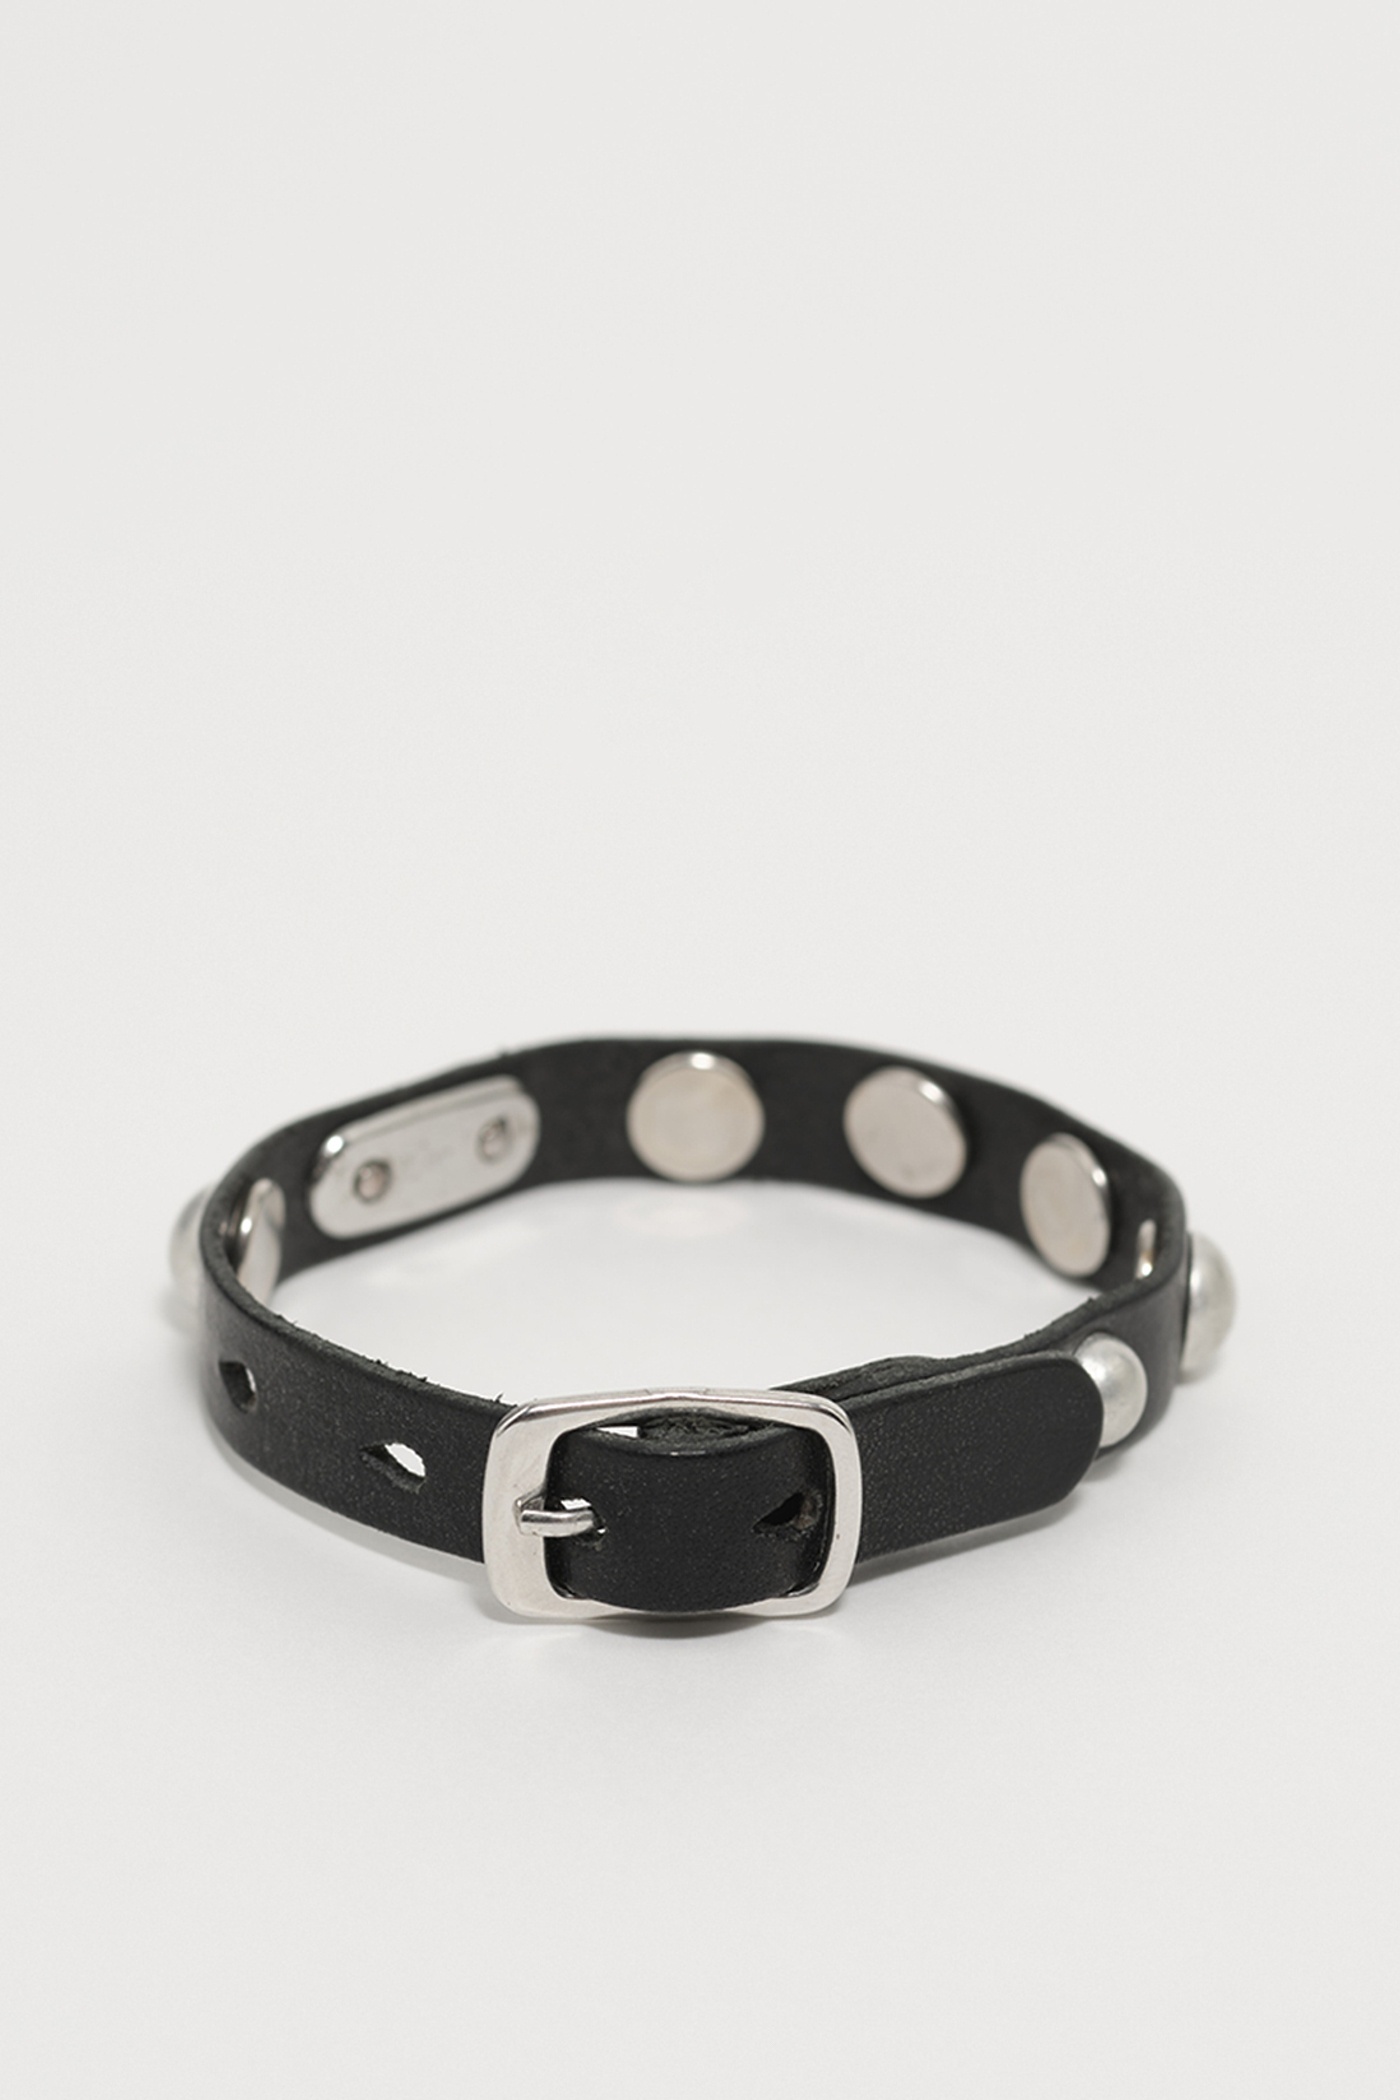 Superslim Bracelet Grizzly Black Leather - 2